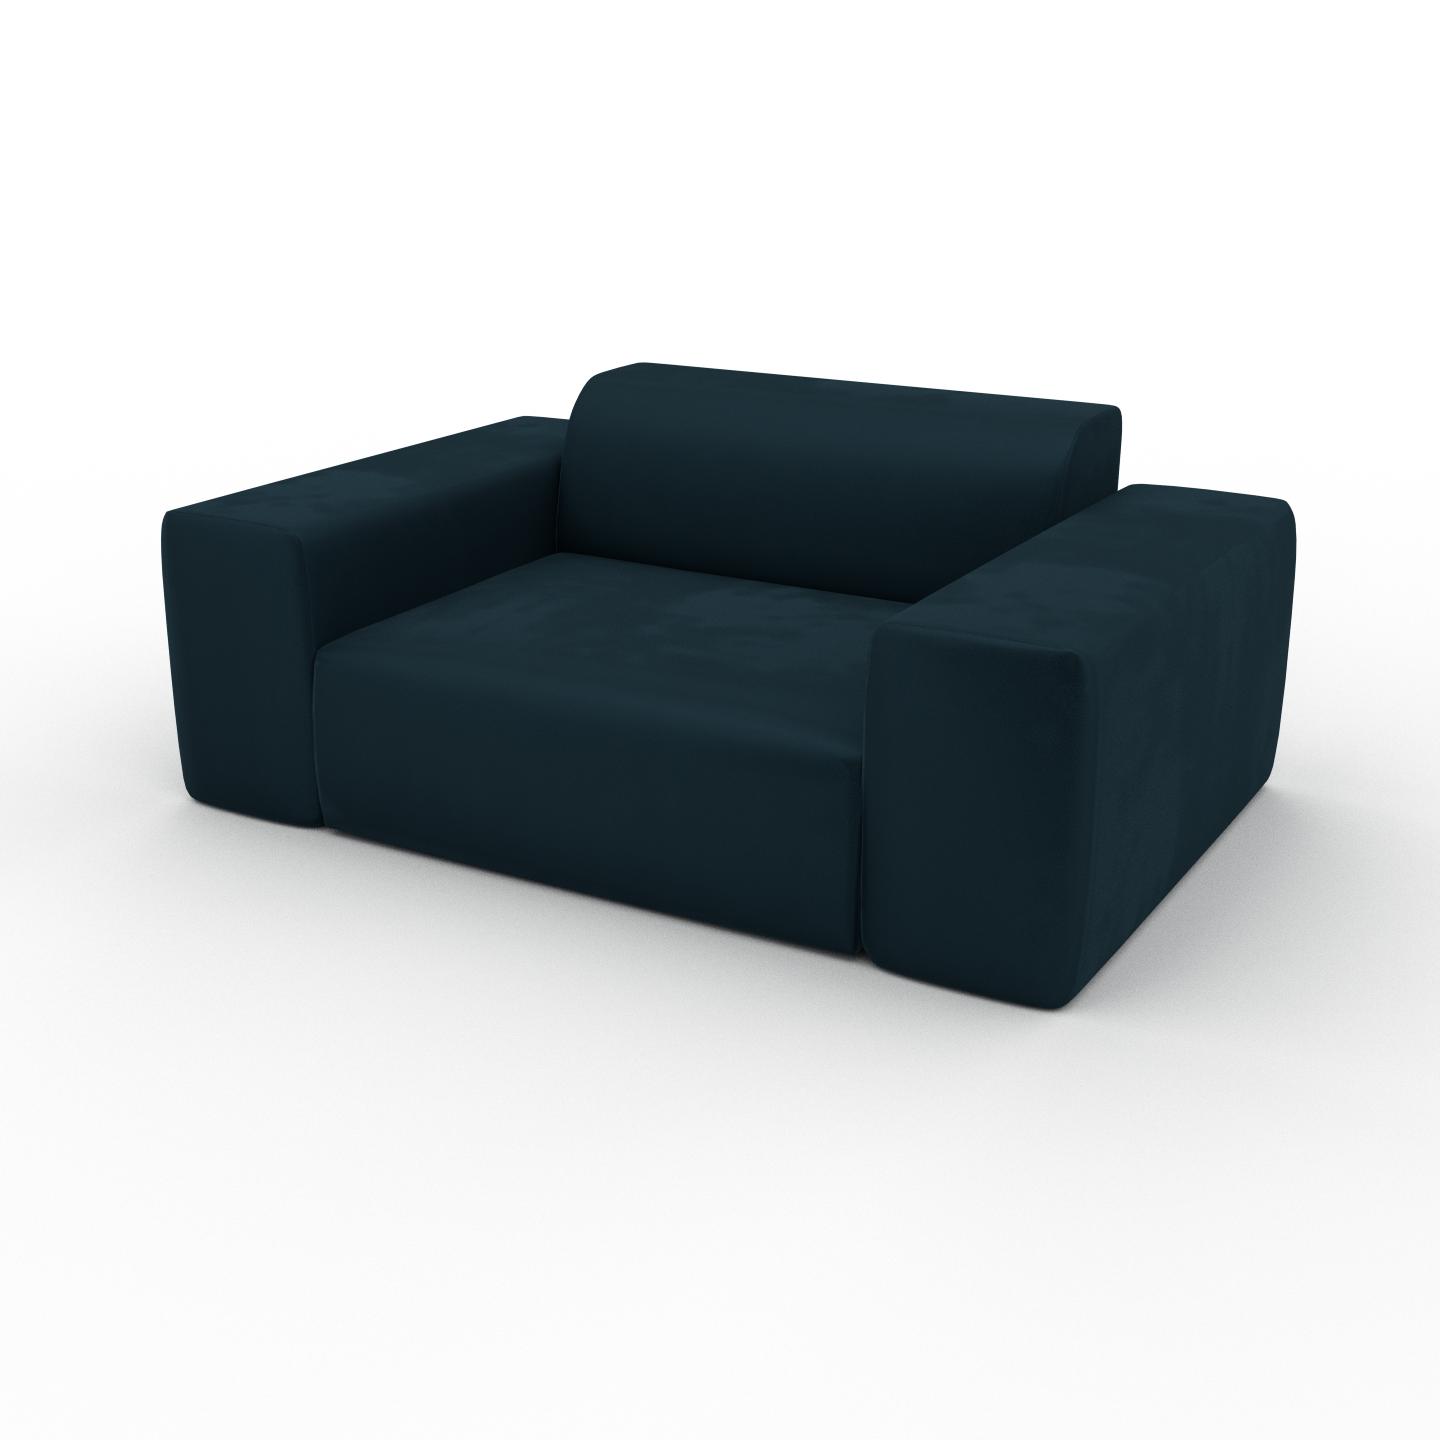 MYCS Sessel Samt Petrolblau - Eleganter Sessel: Hochwertige Qualität, einzigartiges Design - 166 x 72 x 107 cm, Individuell konfigurierbar